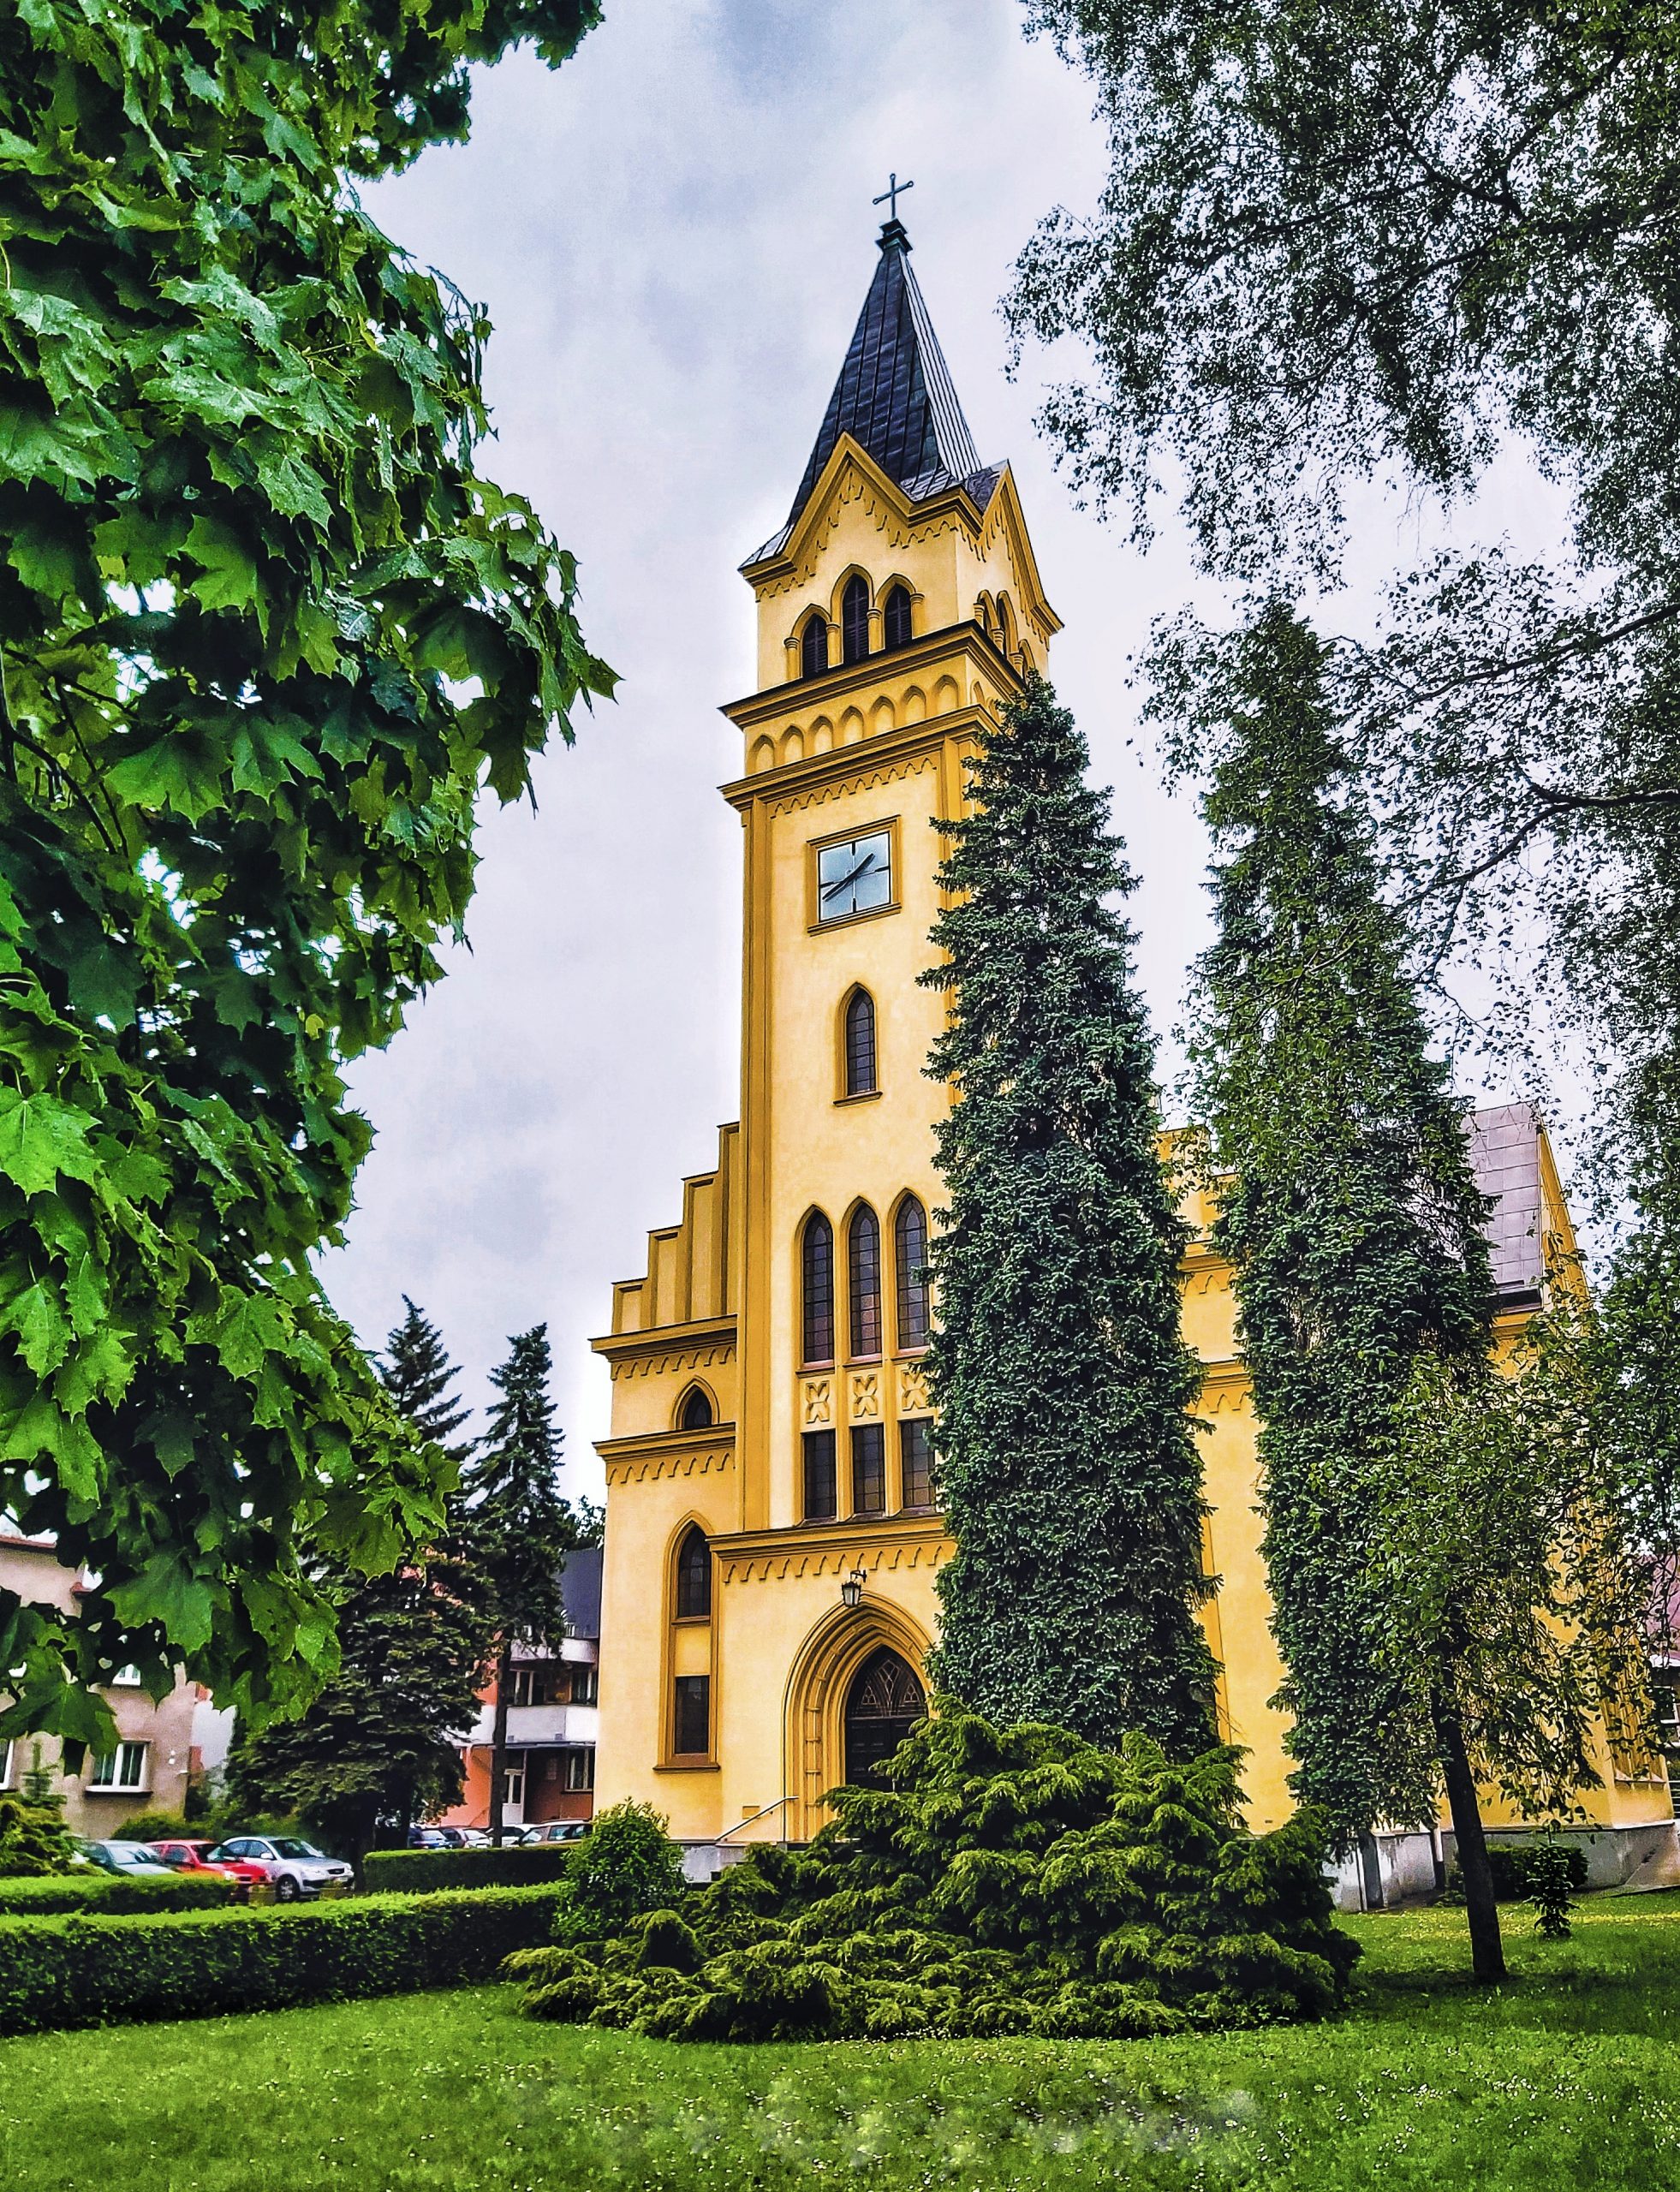 Heavenly church in Czech Republic.